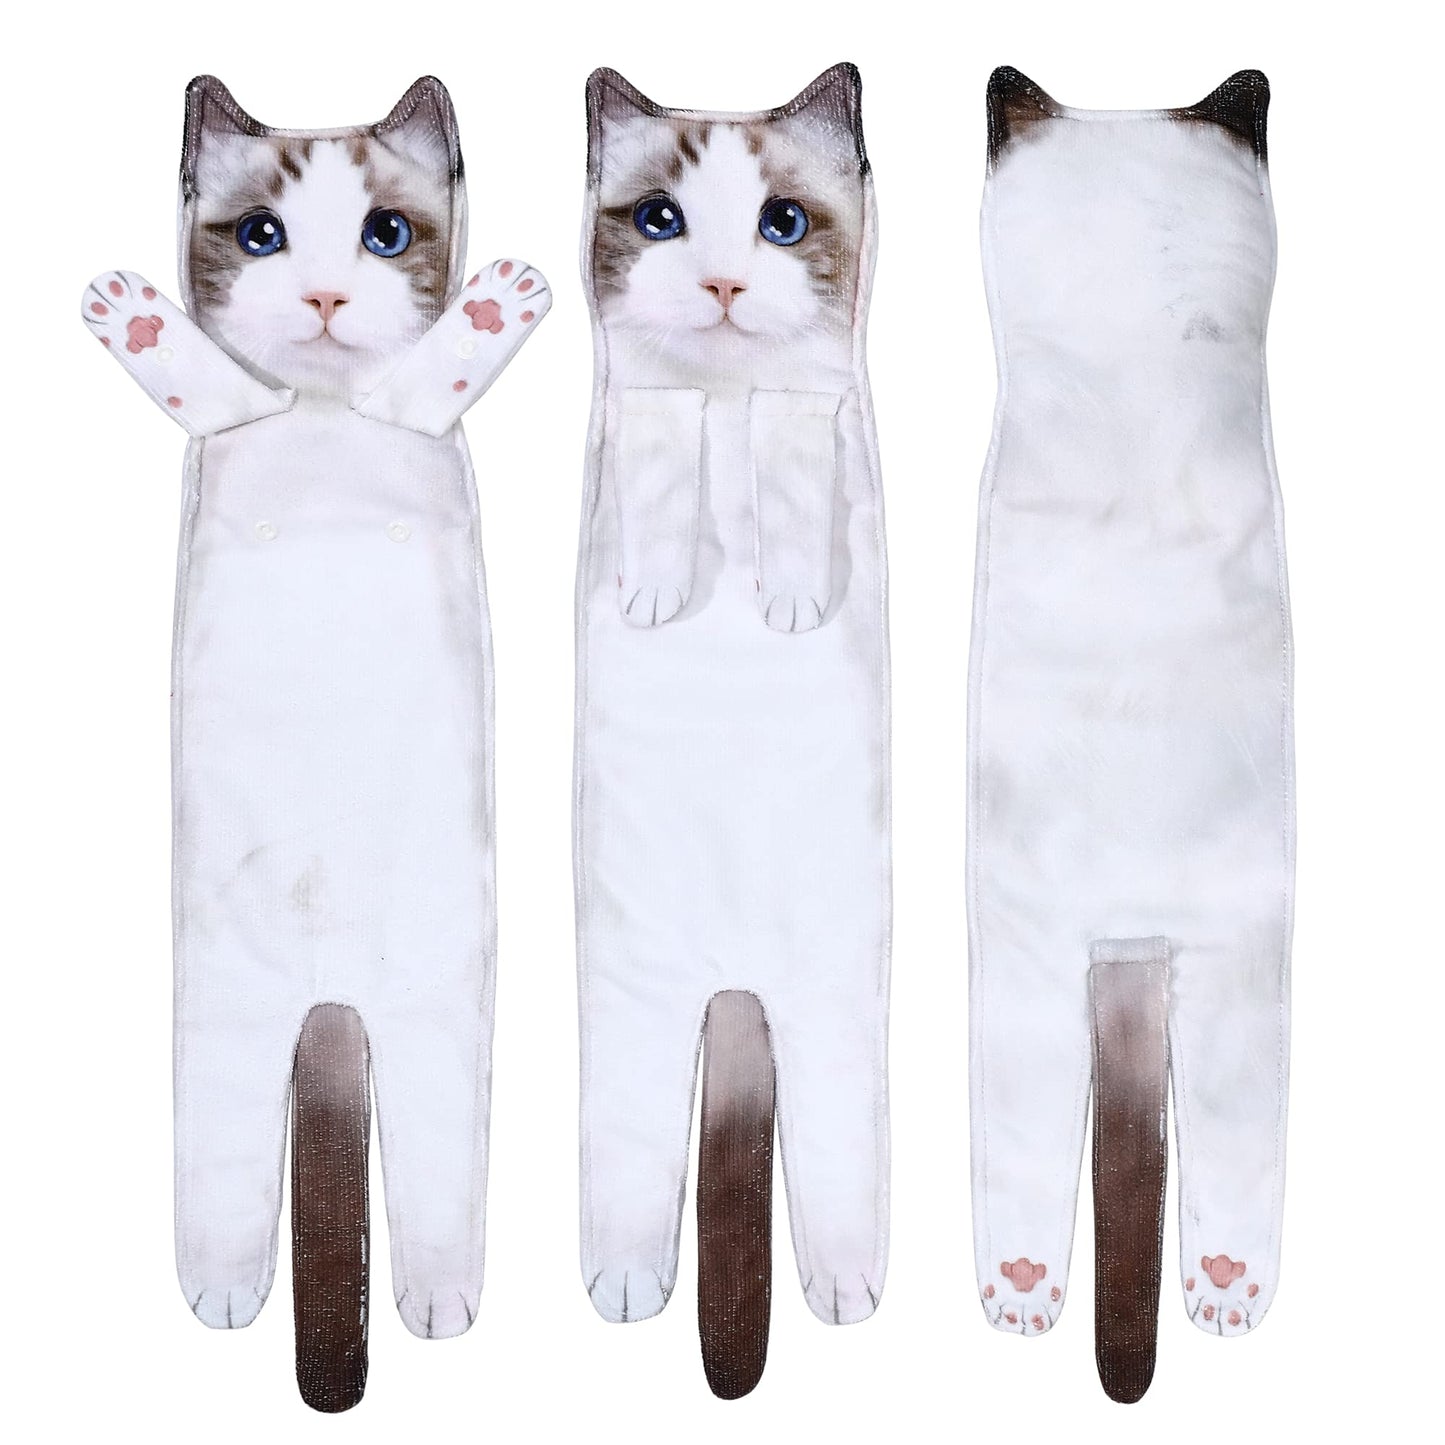 Cat Hand Towels - Cute Decorative